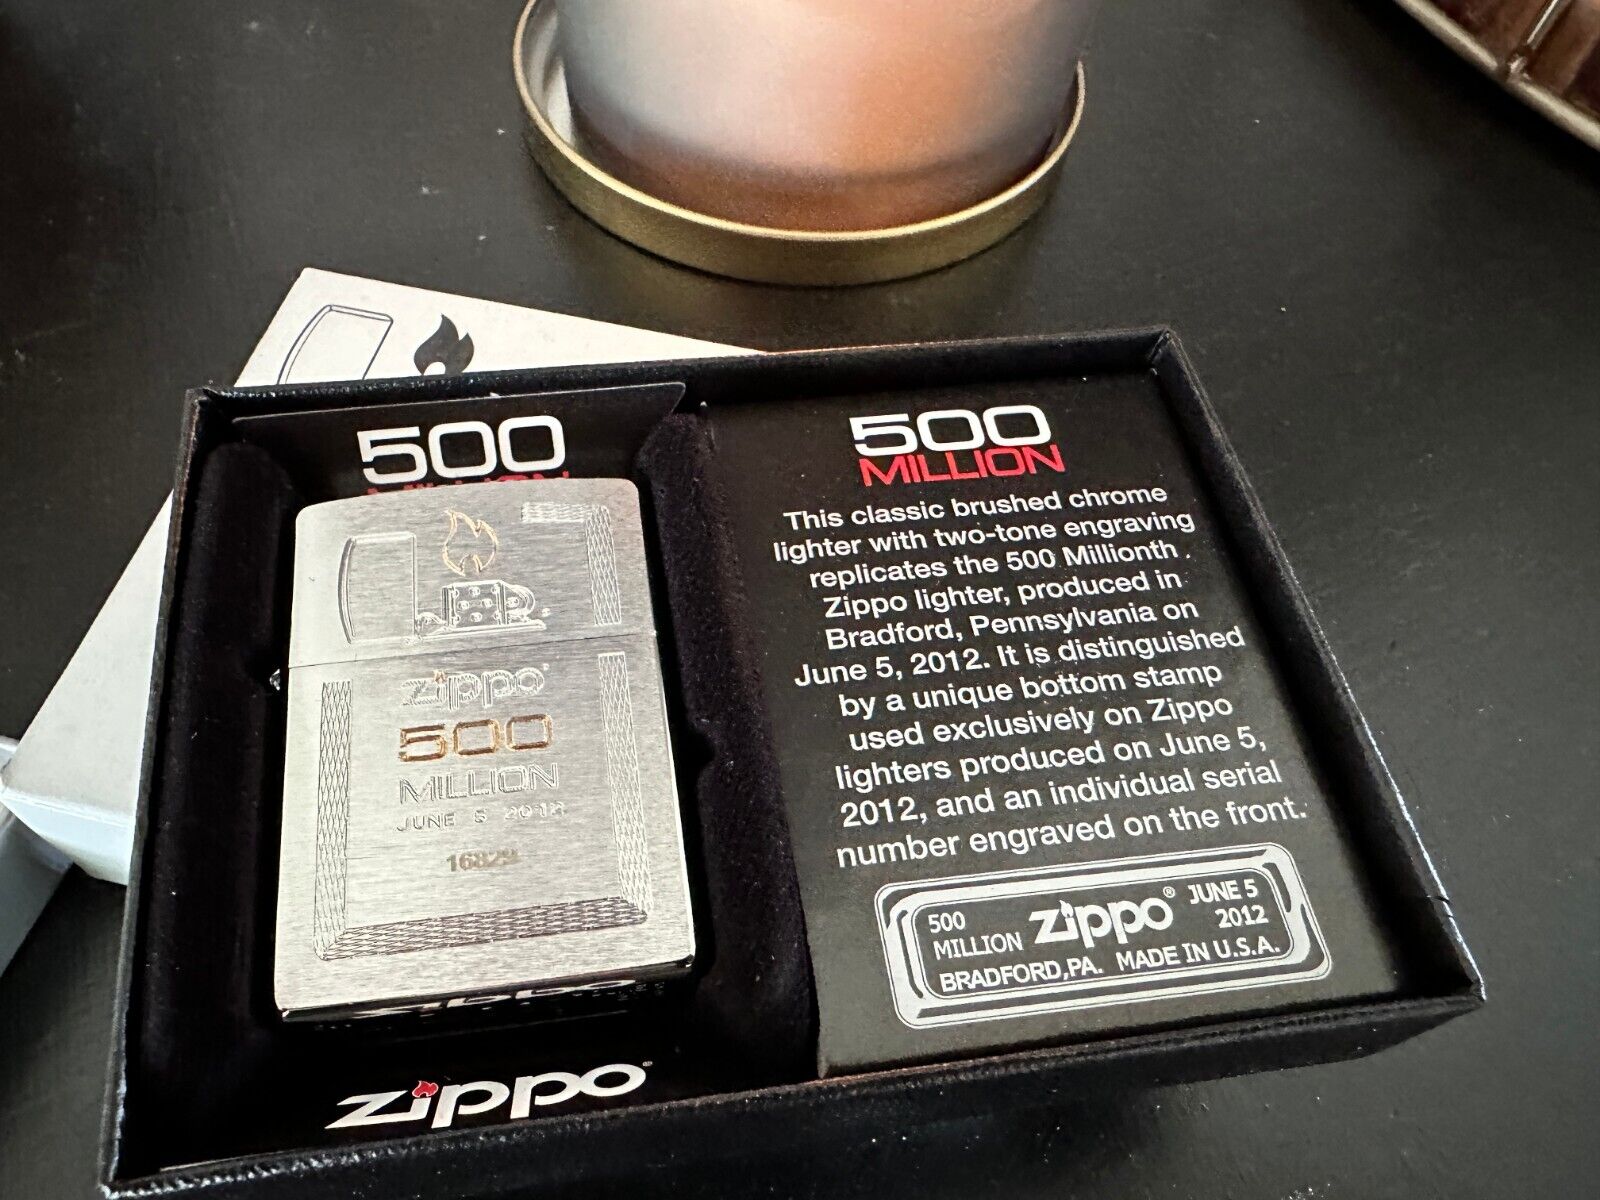 Zippo - 500 Million Limited Edition Lighter - #16829 June 5, 2012 - MINT